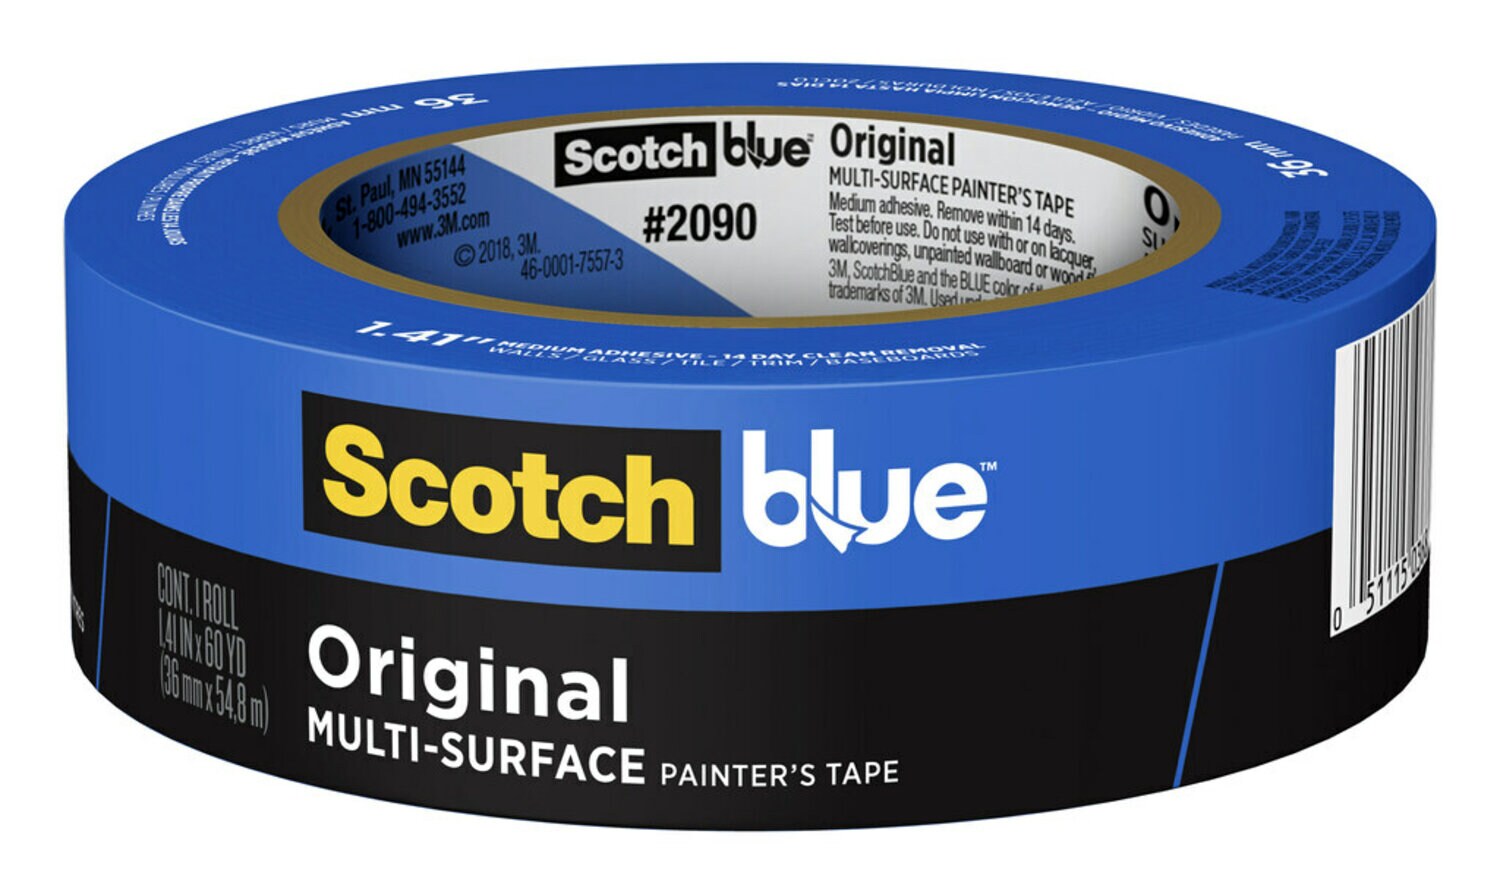 7100186419 - ScotchBlue Original Painter's Tape 2090-36AP, 1.41 in x 60 yd (36mm x
54,8m)